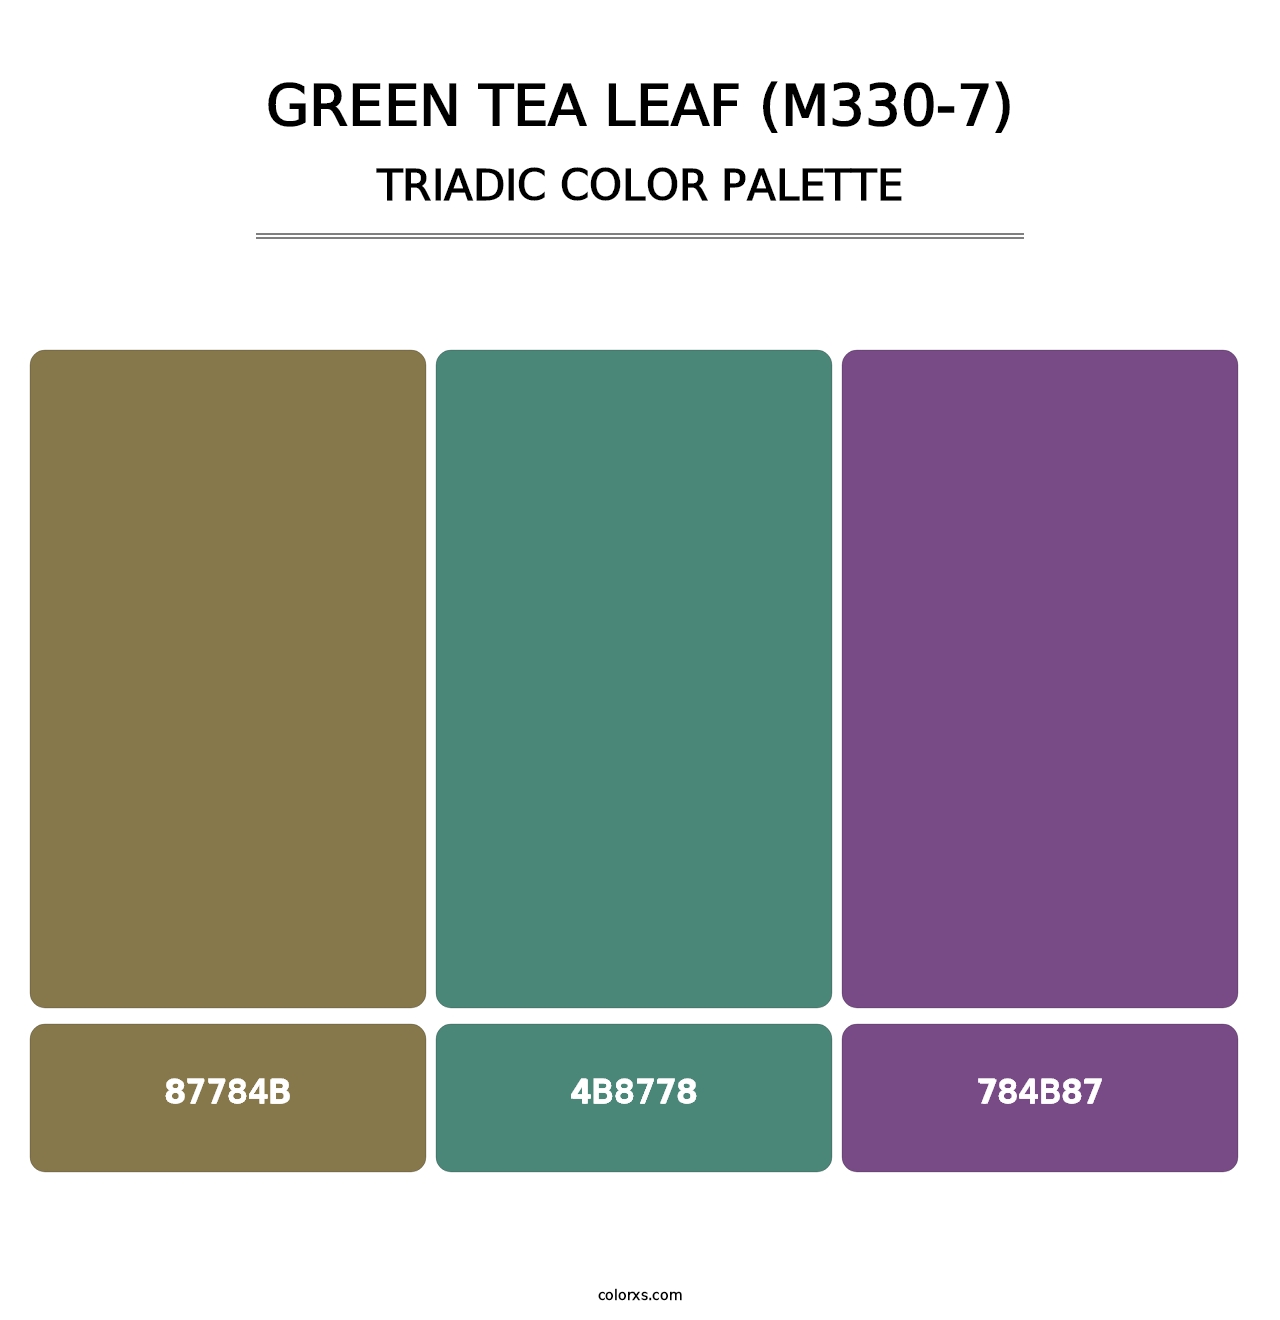 Green Tea Leaf (M330-7) - Triadic Color Palette